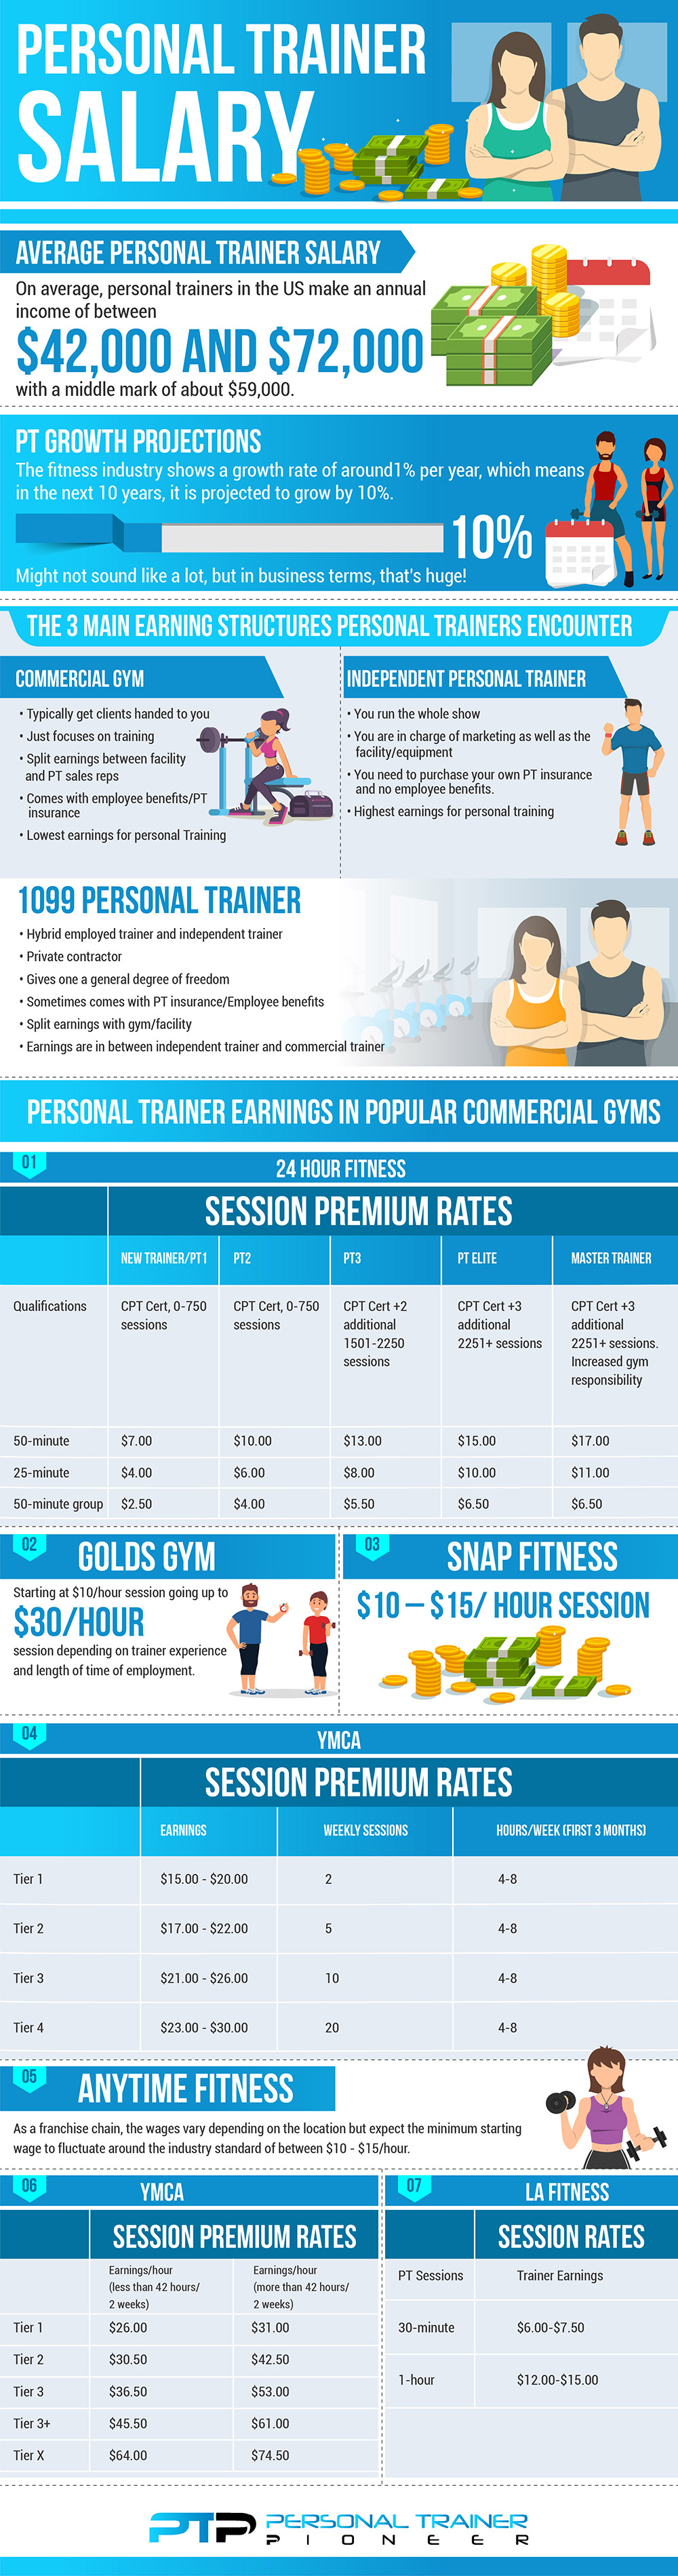 Personal Training Salary